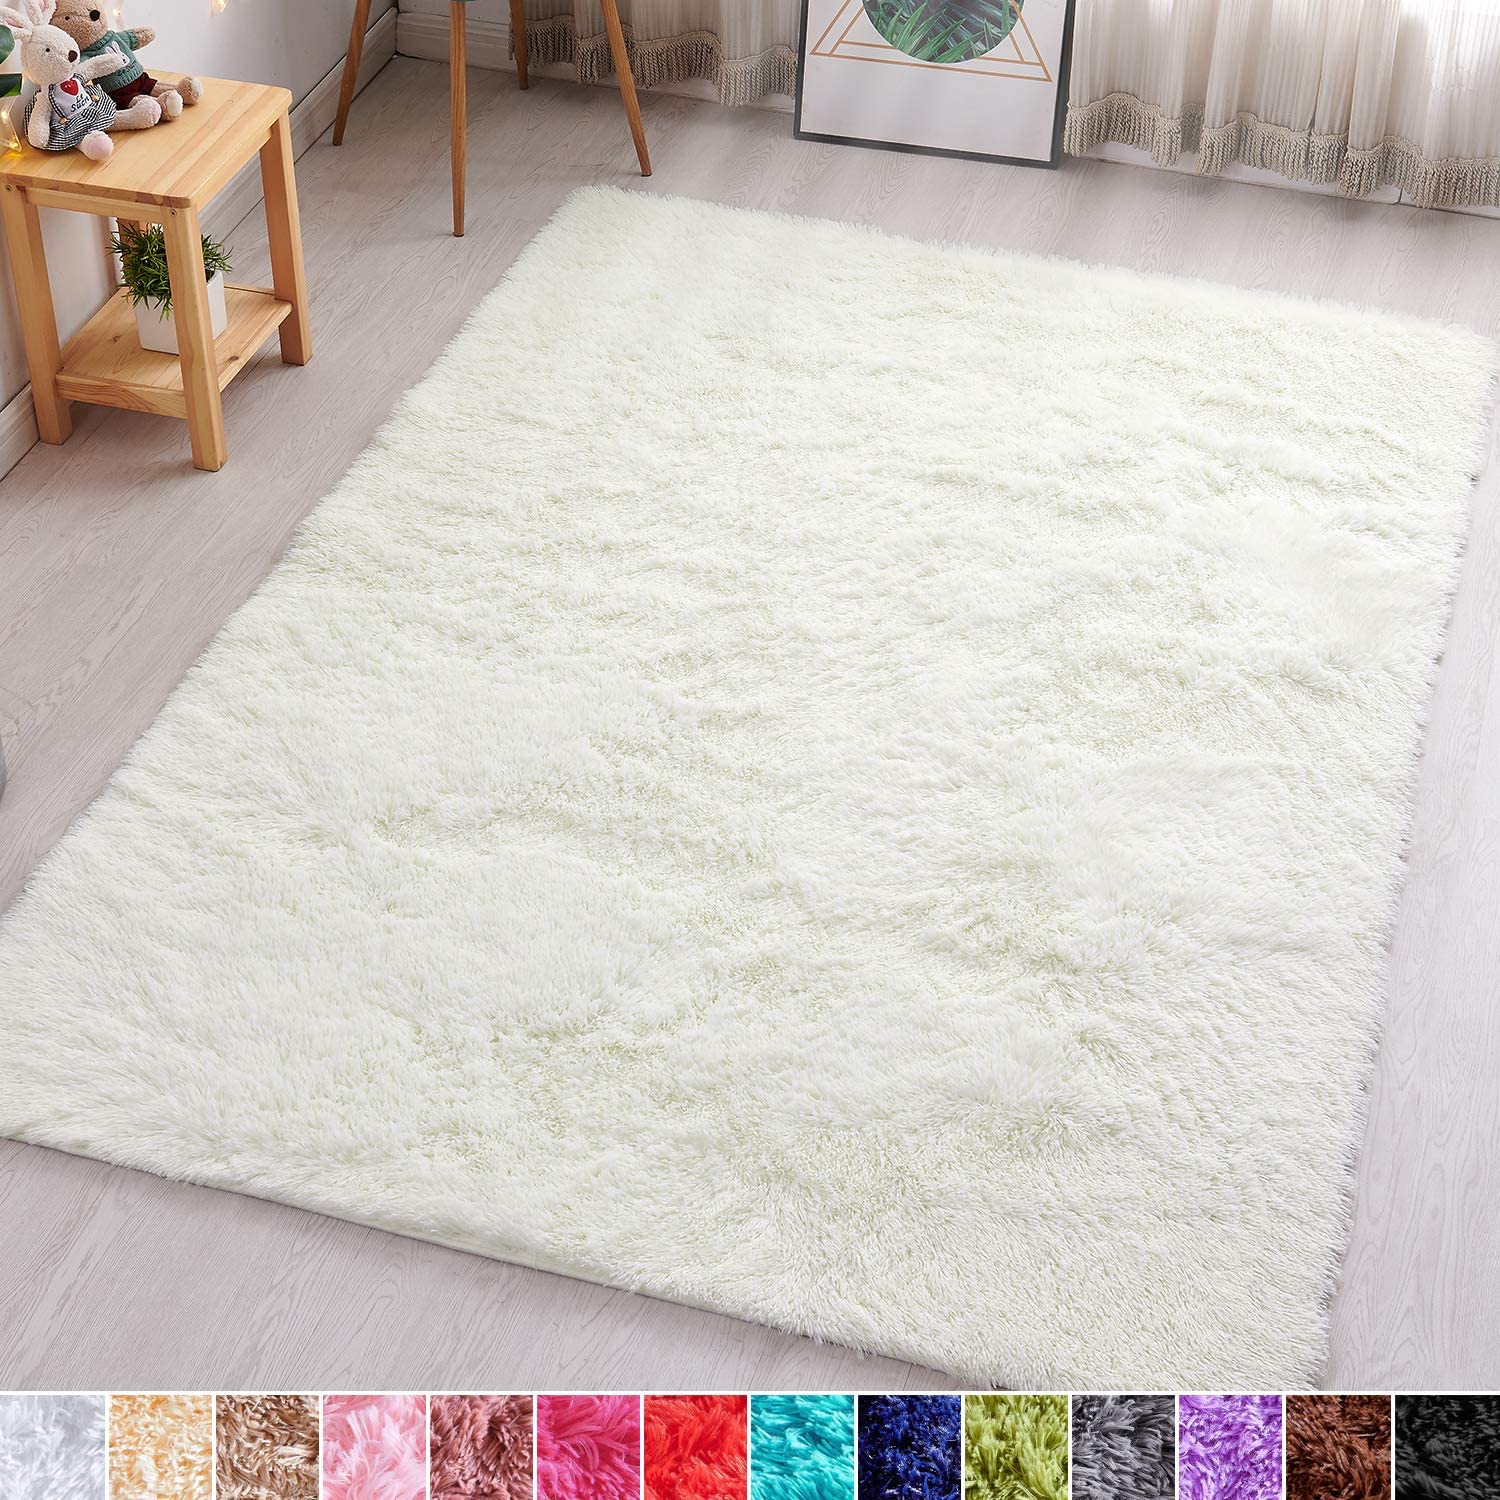 PAGISOFE Soft Comfy White Area Rugs for Bedroom Living Room Fluffy Shag Fur Carp 